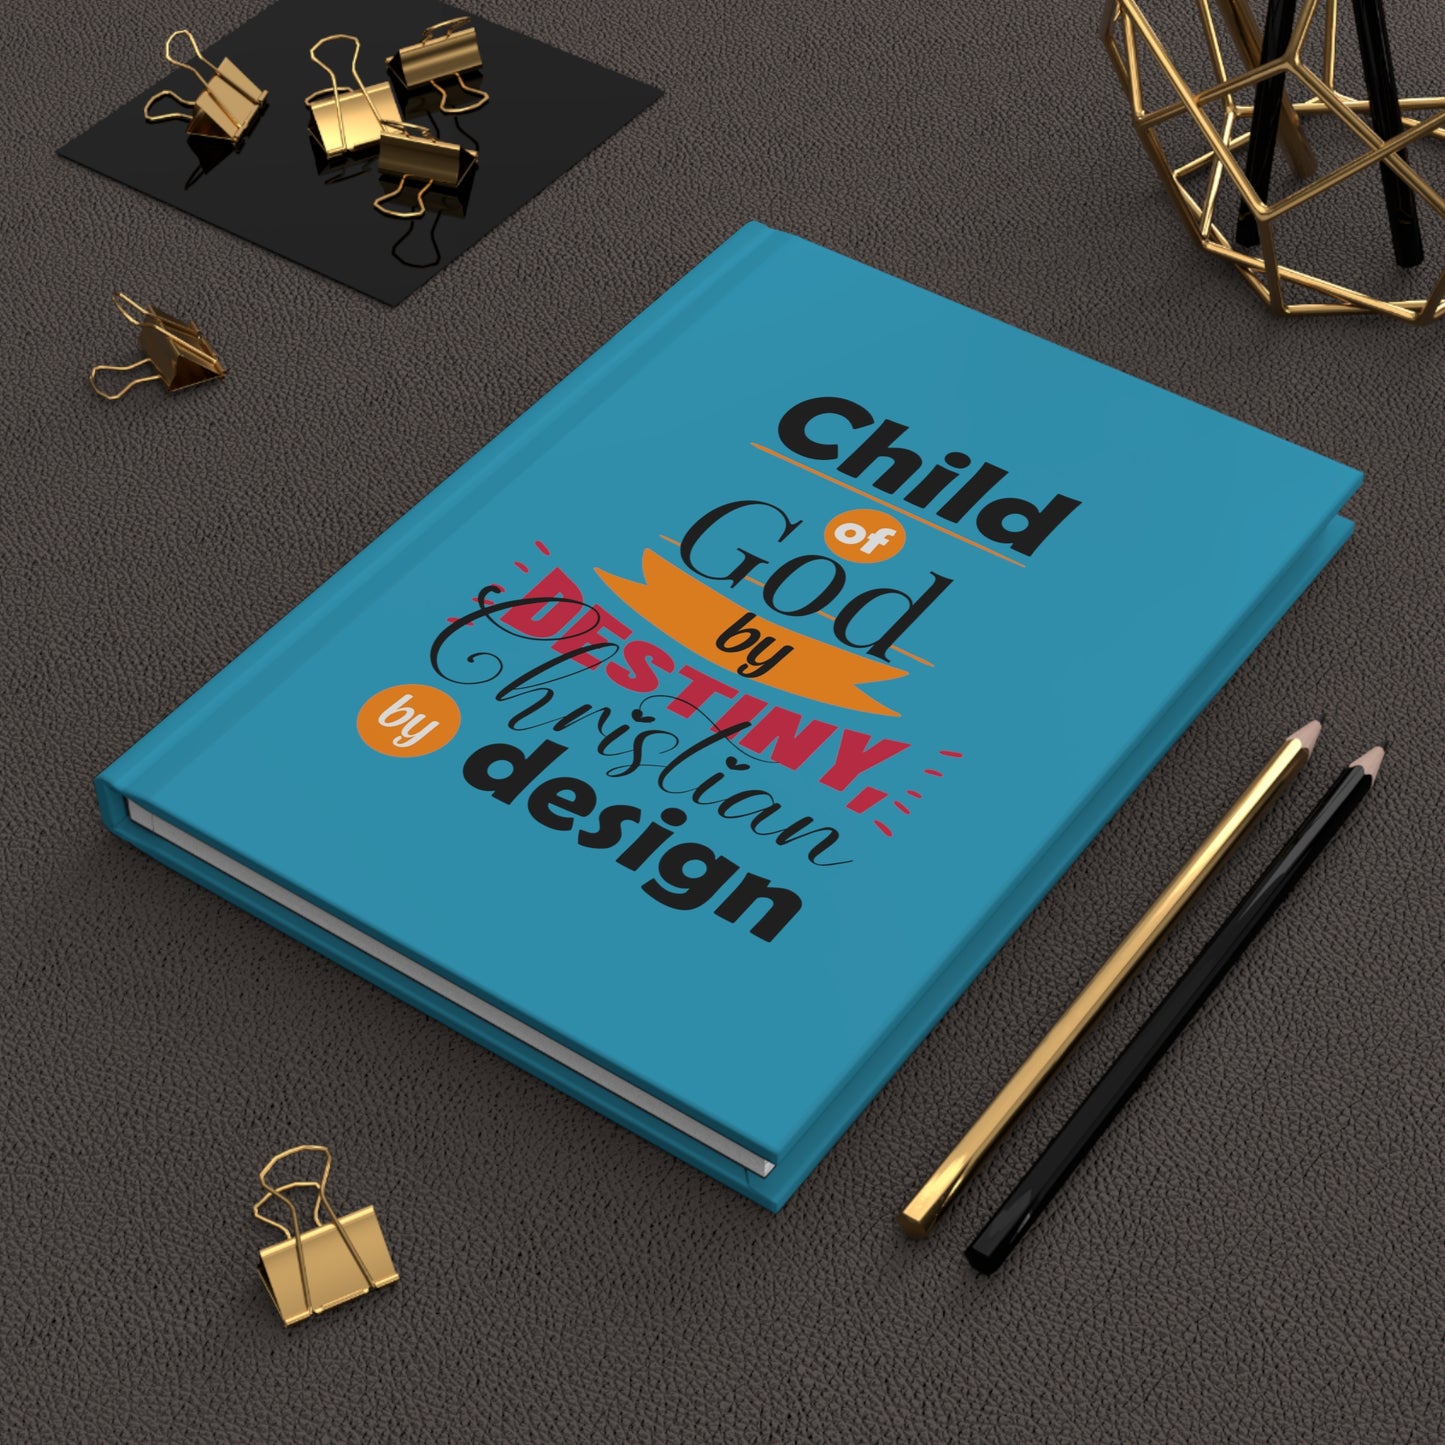 Child Of God By Destiny Christian By Design Hardcover Journal Matte